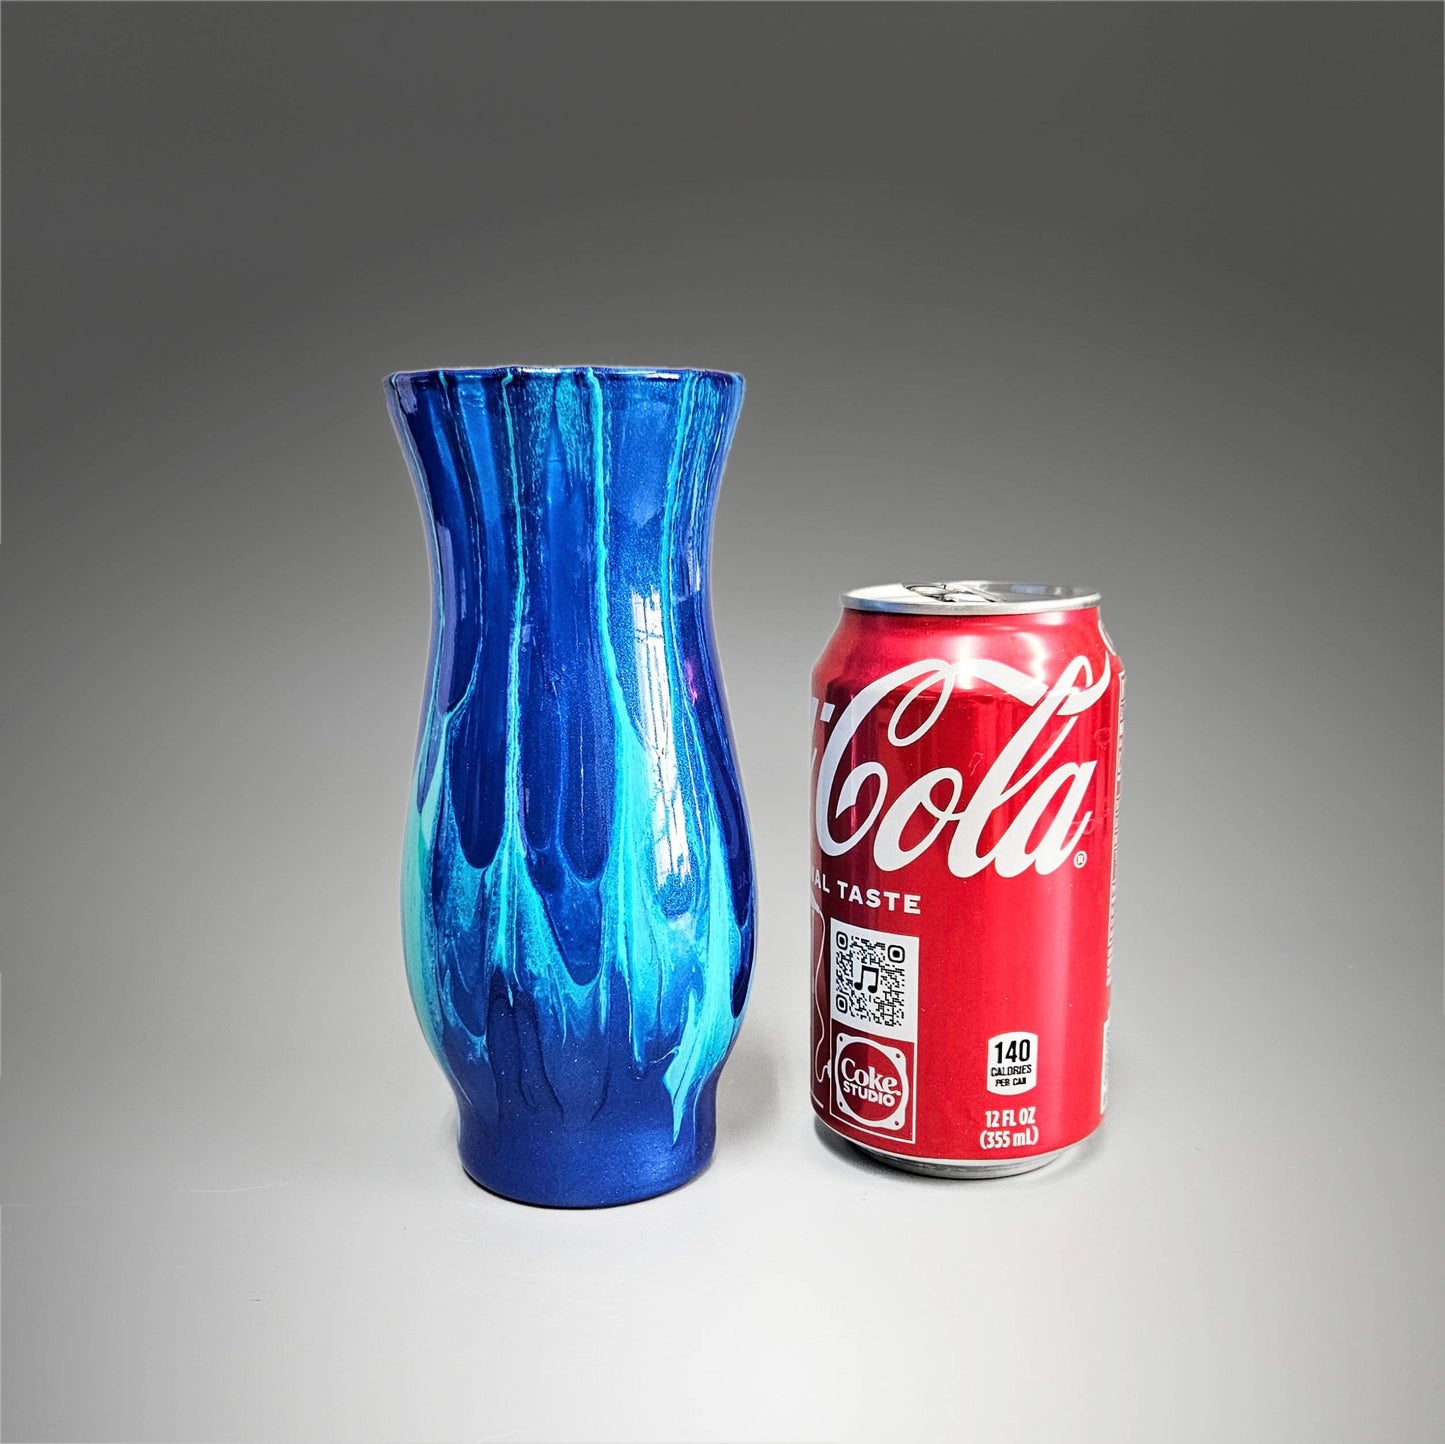 Painted Glass Art Bud Vases in Aqua Navy Blue | Set of 2